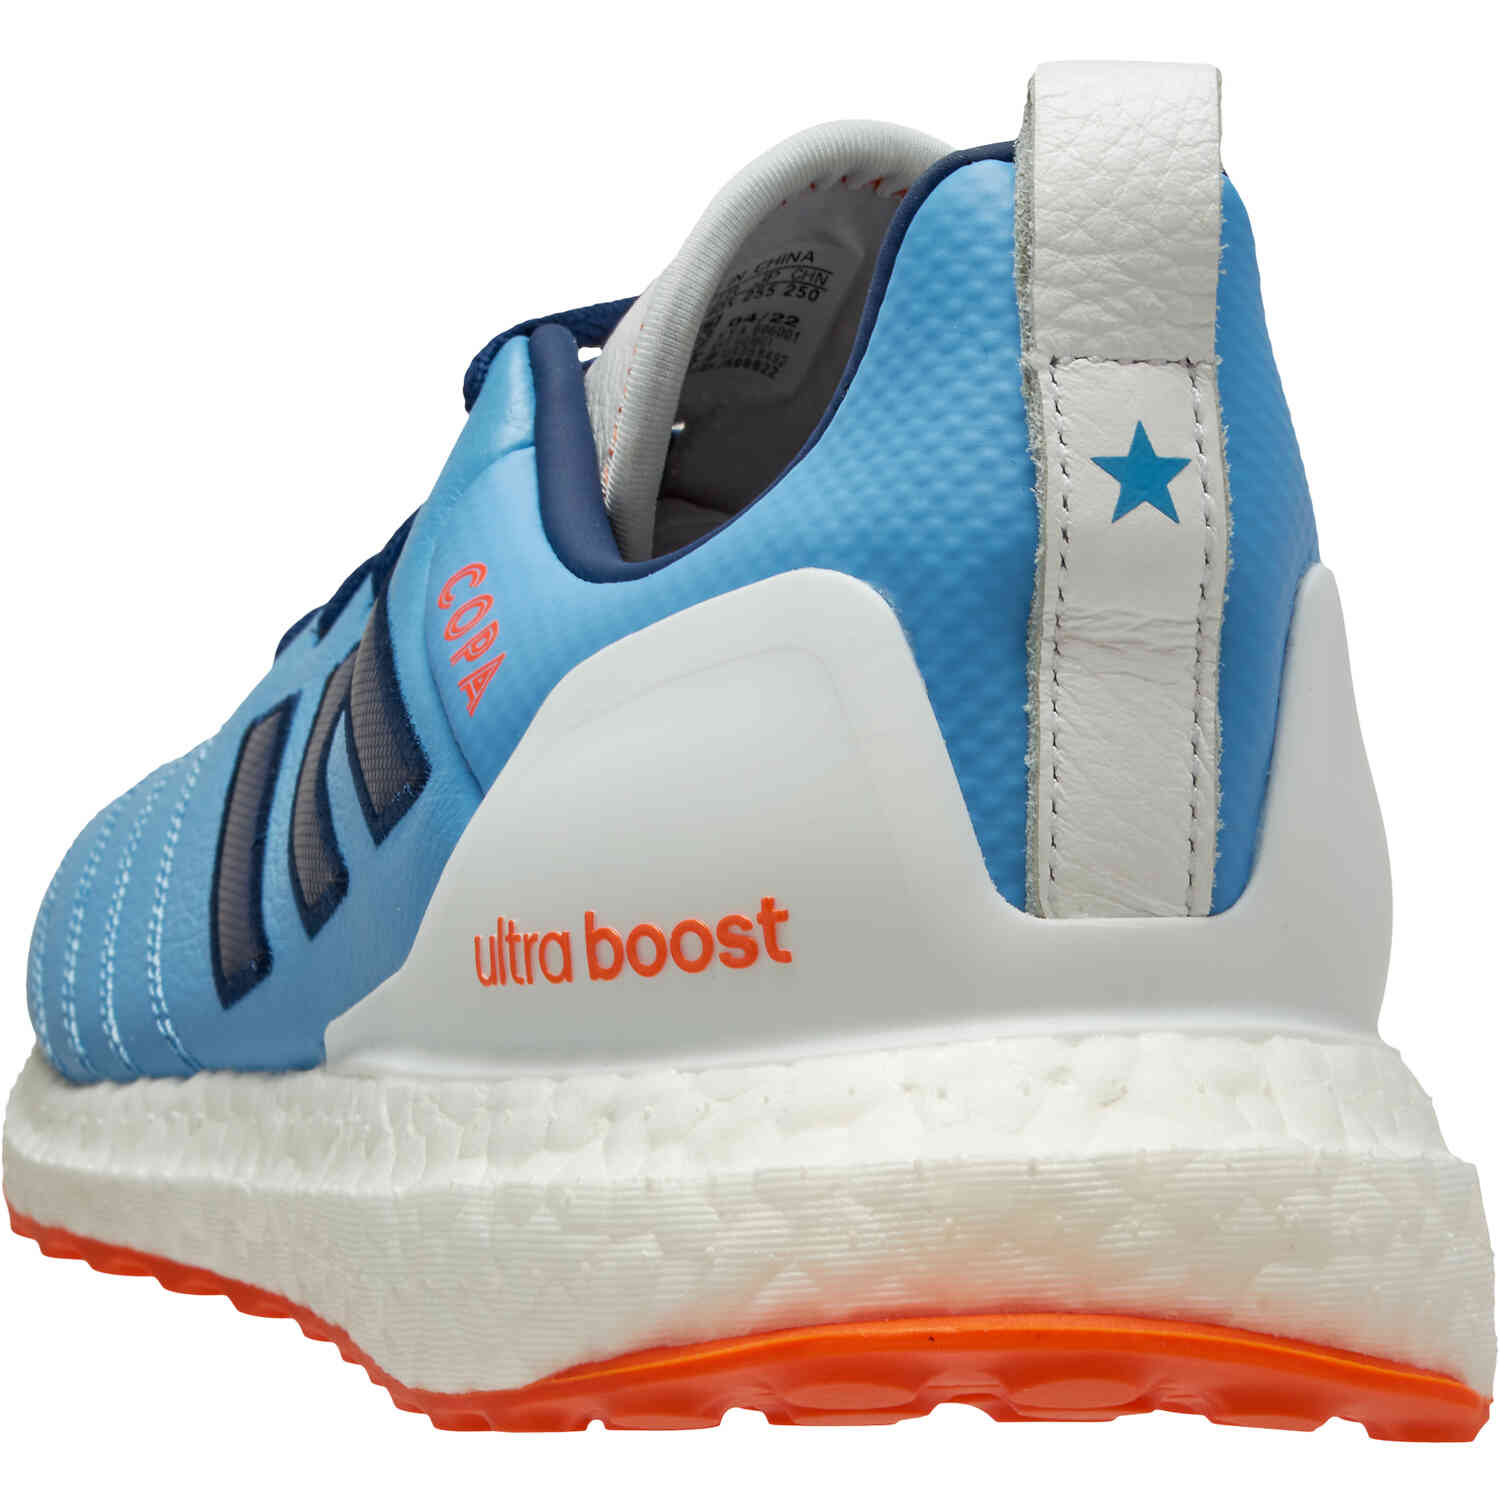 Adidas MLS Copa Ultraboost Shoes - New York City FC - 9